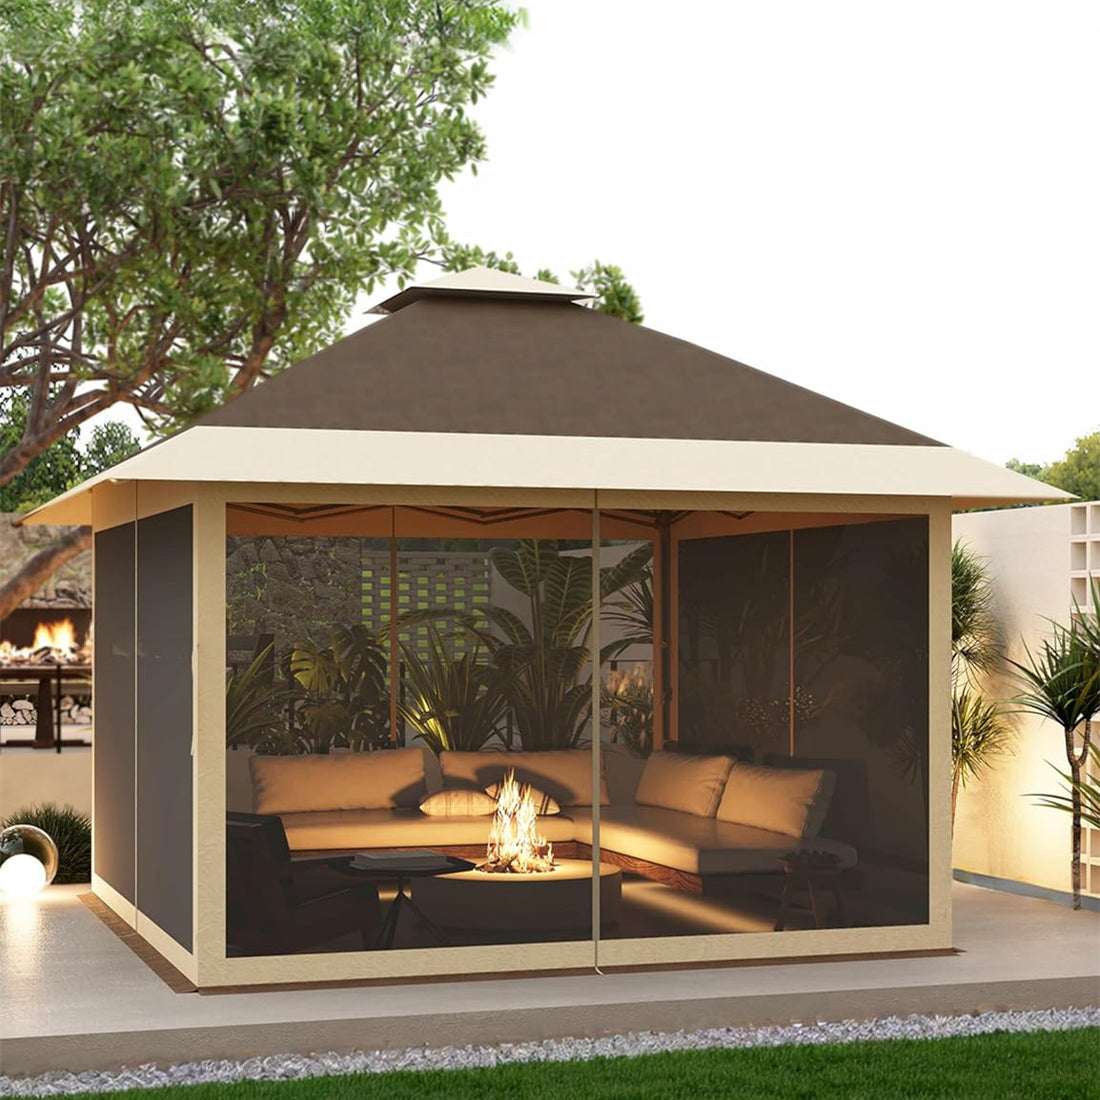 13x13ft Pop Up Gazebo Outdoor Canopy Shelter with Mosquito Netting 4 Stanbags Instant Gazebo Tent for Lawn, Garden, Backyard Deck (Khaki + Dark Khaki)